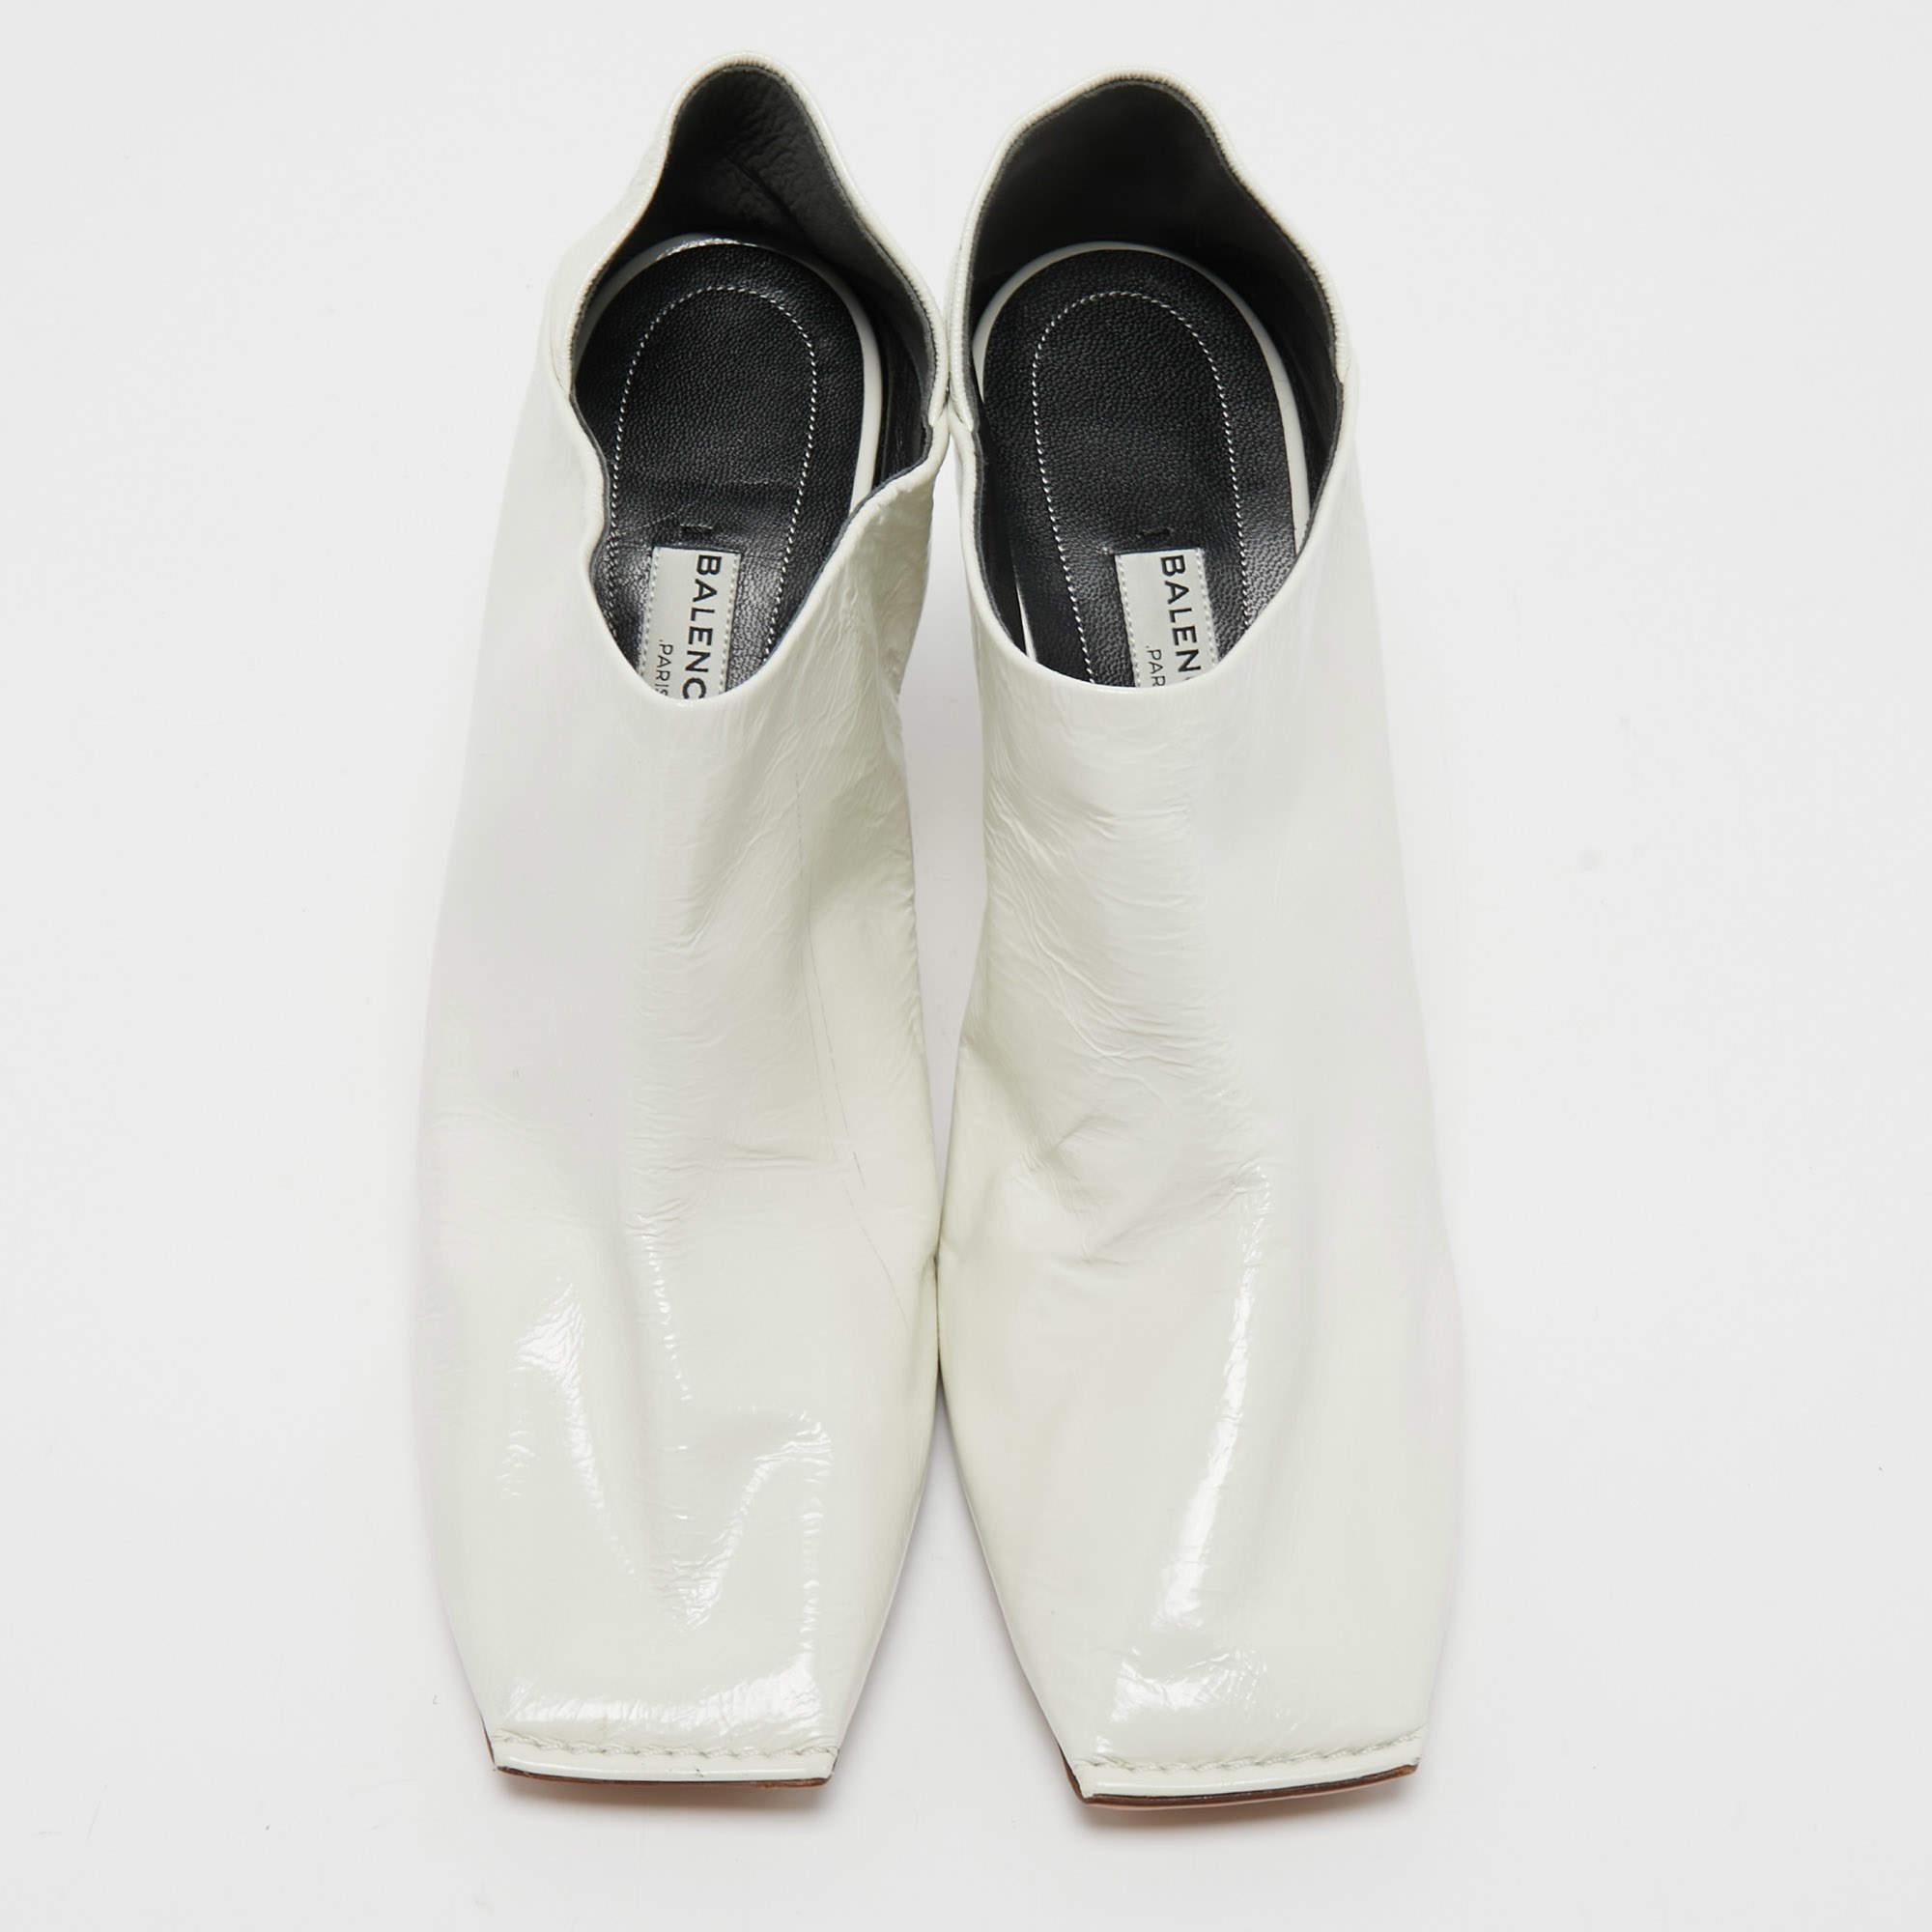 Gray Balenciaga White Leather Square Toe Booties Size 38